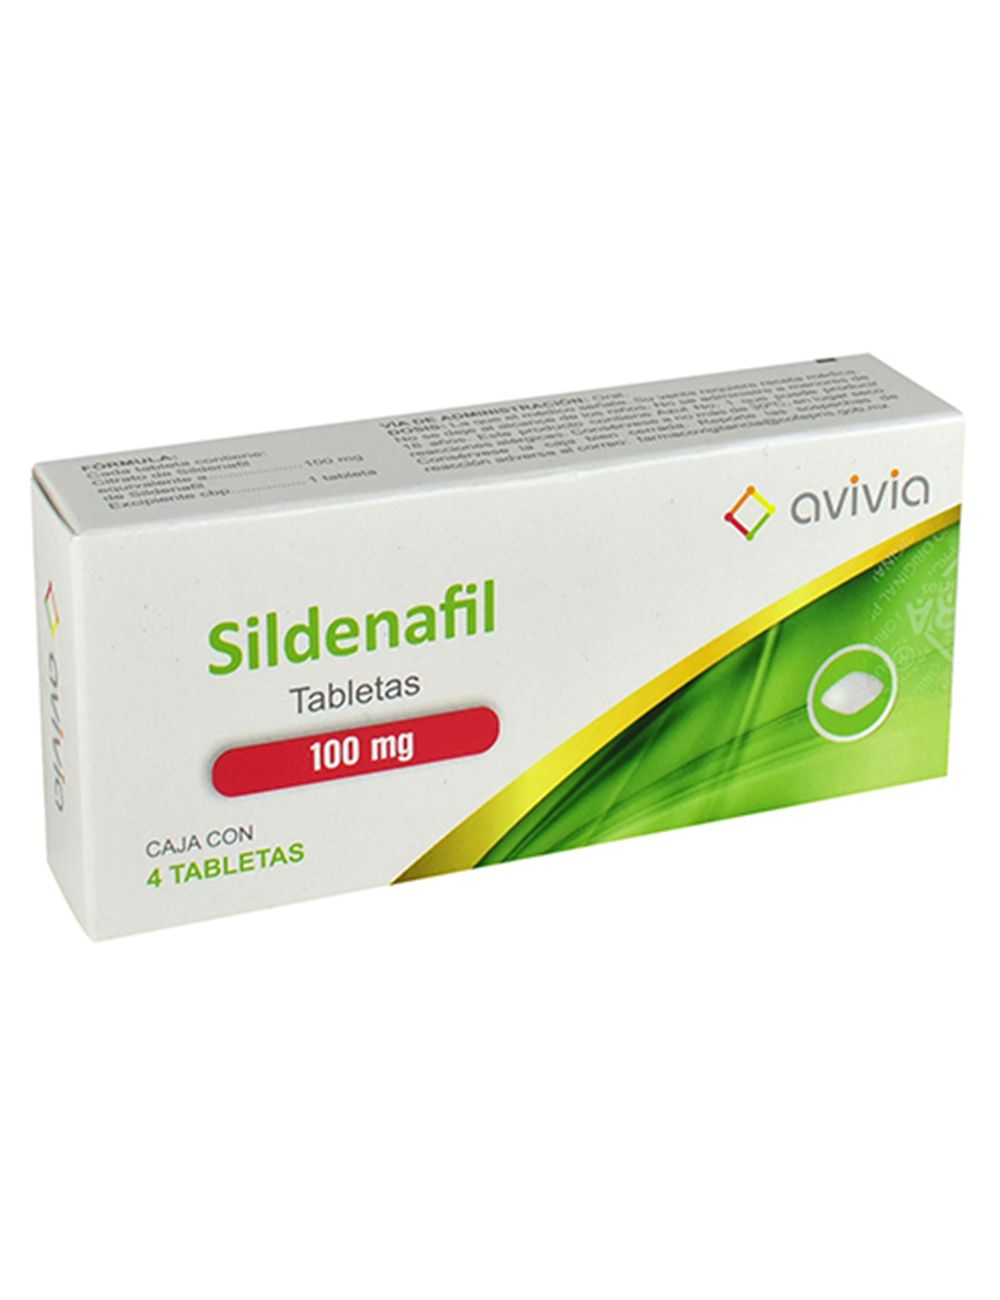 Sildenafil 100 mg Con 4 Tabletas